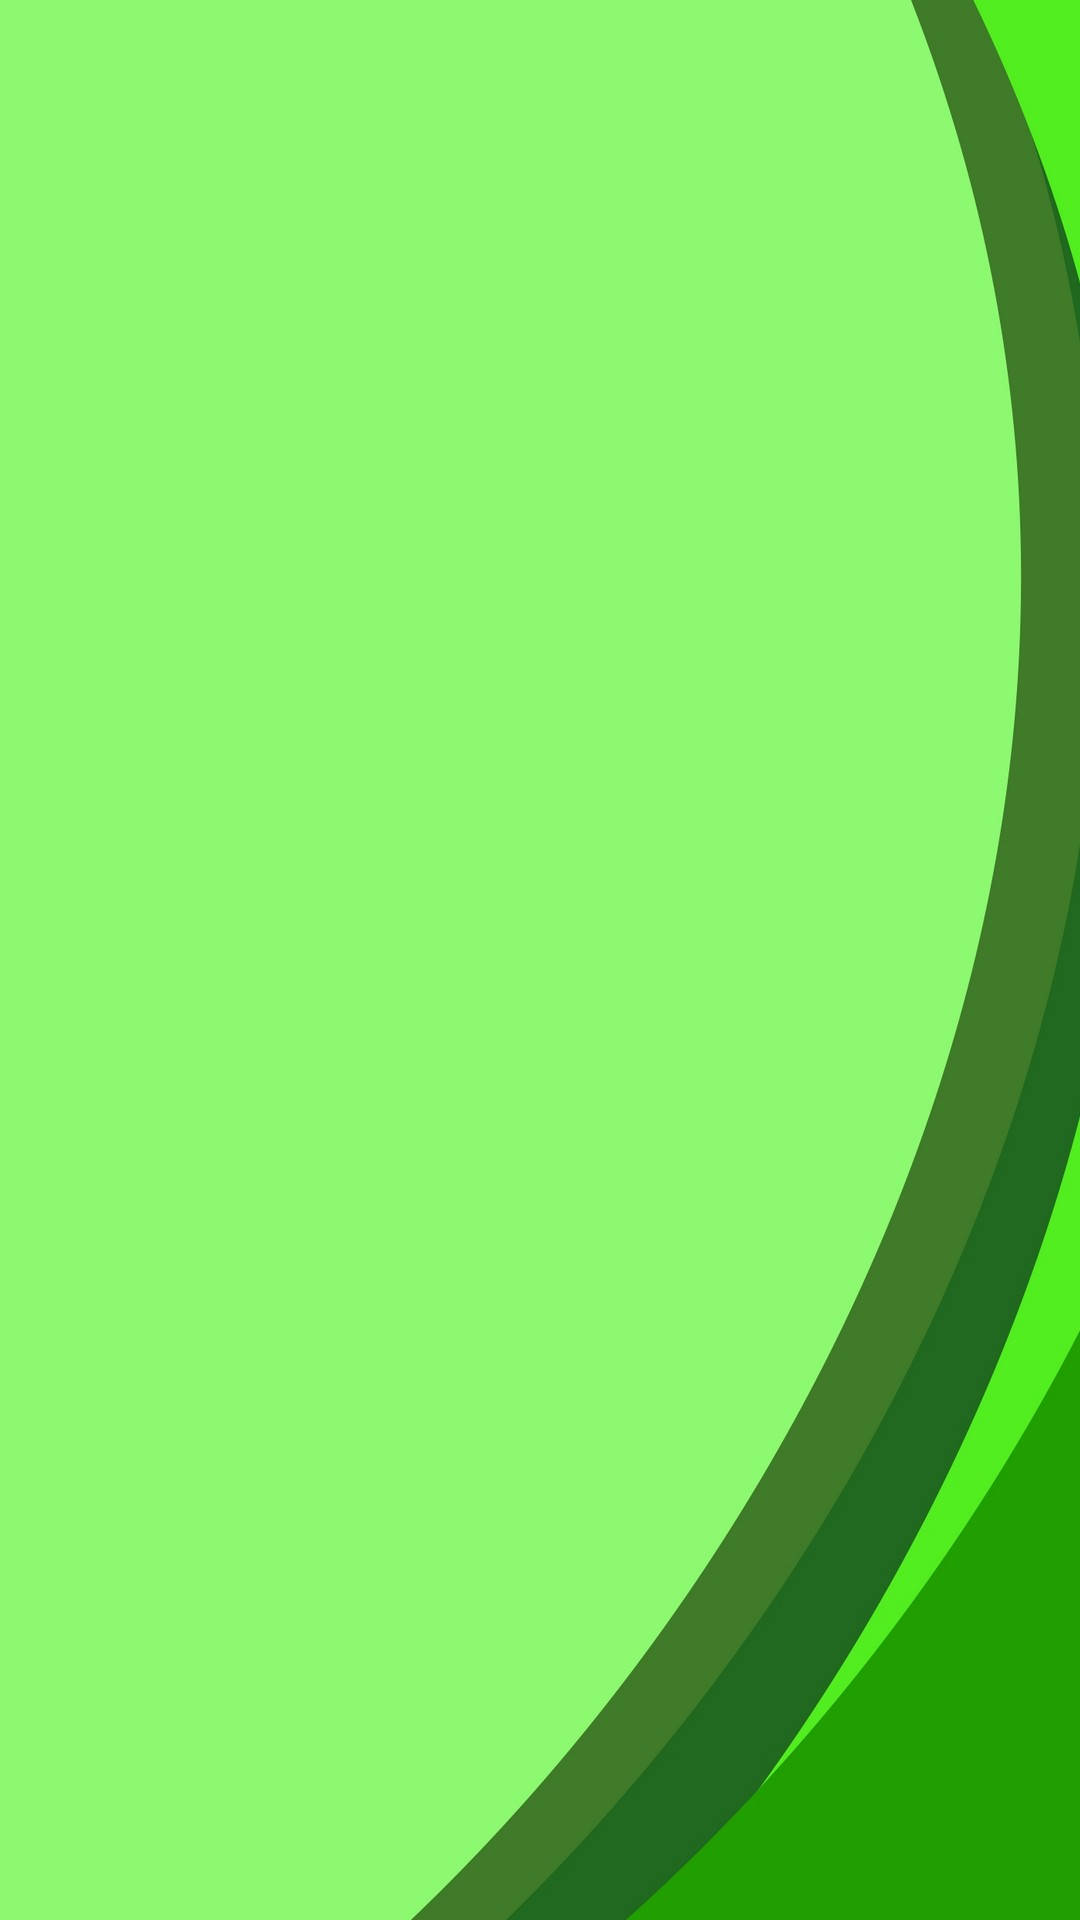 Minimalistic Plain Light Green Background